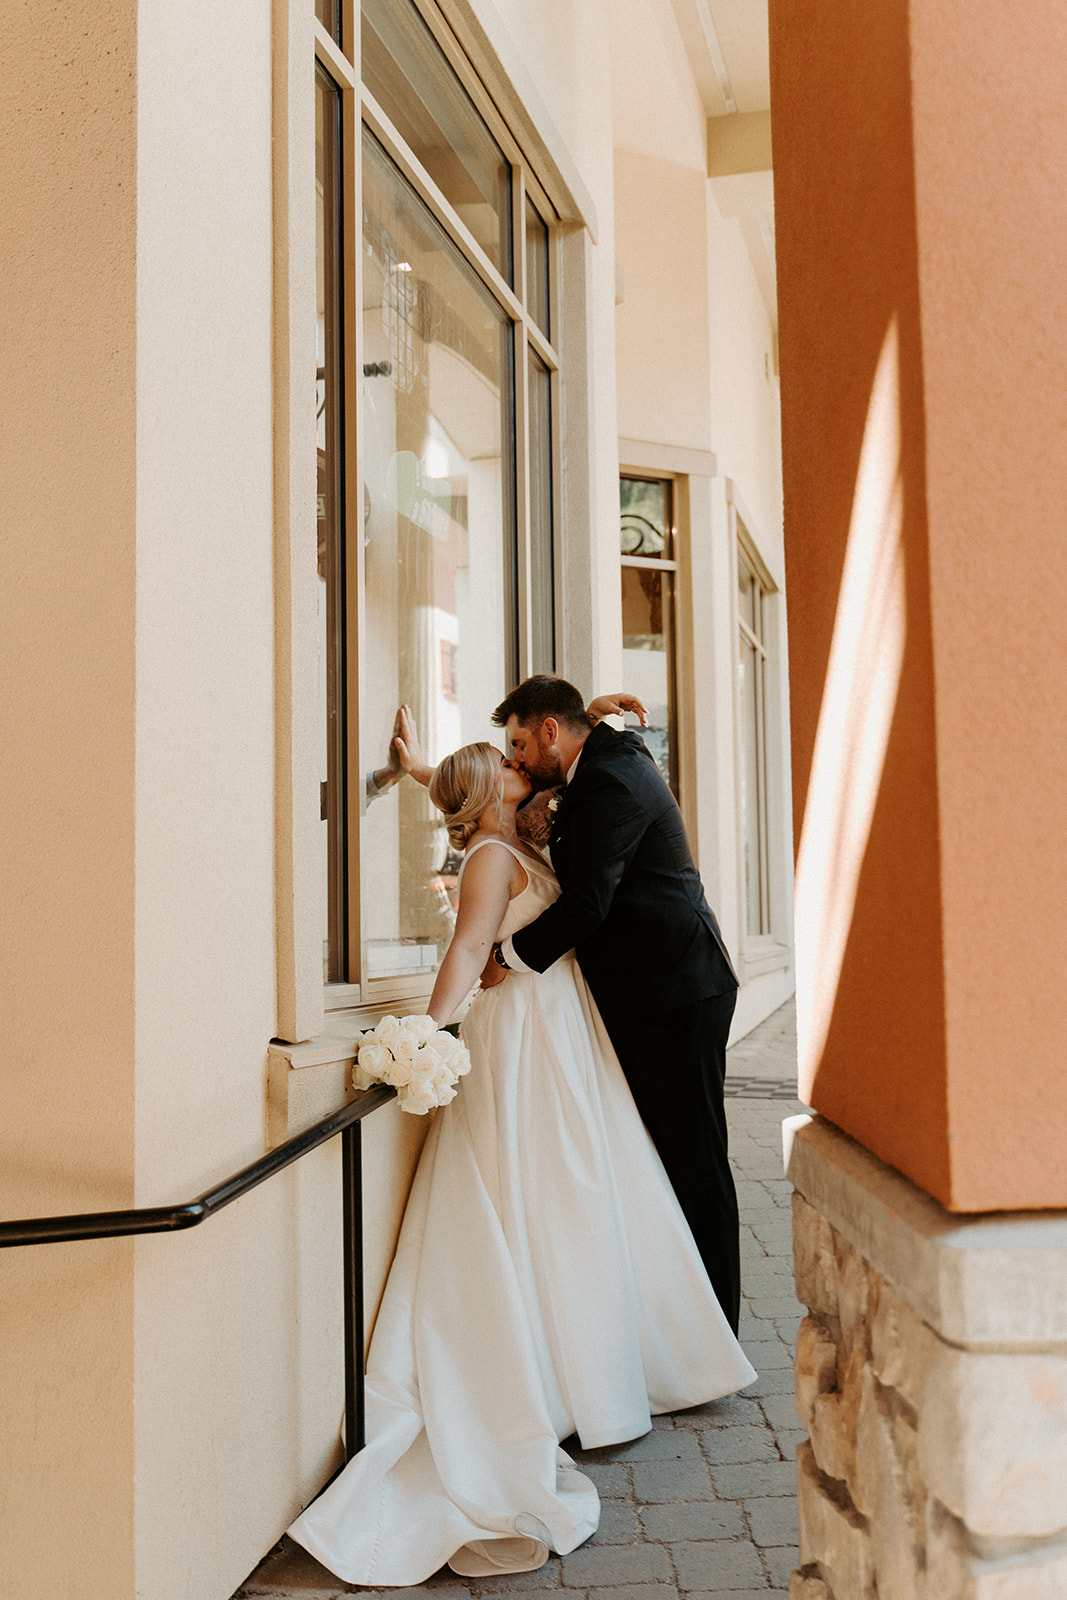 Sun Peaks Mountain Resort Wedding Photos, Dress Hanging Shot, Grand Staircase Bridal Portraits